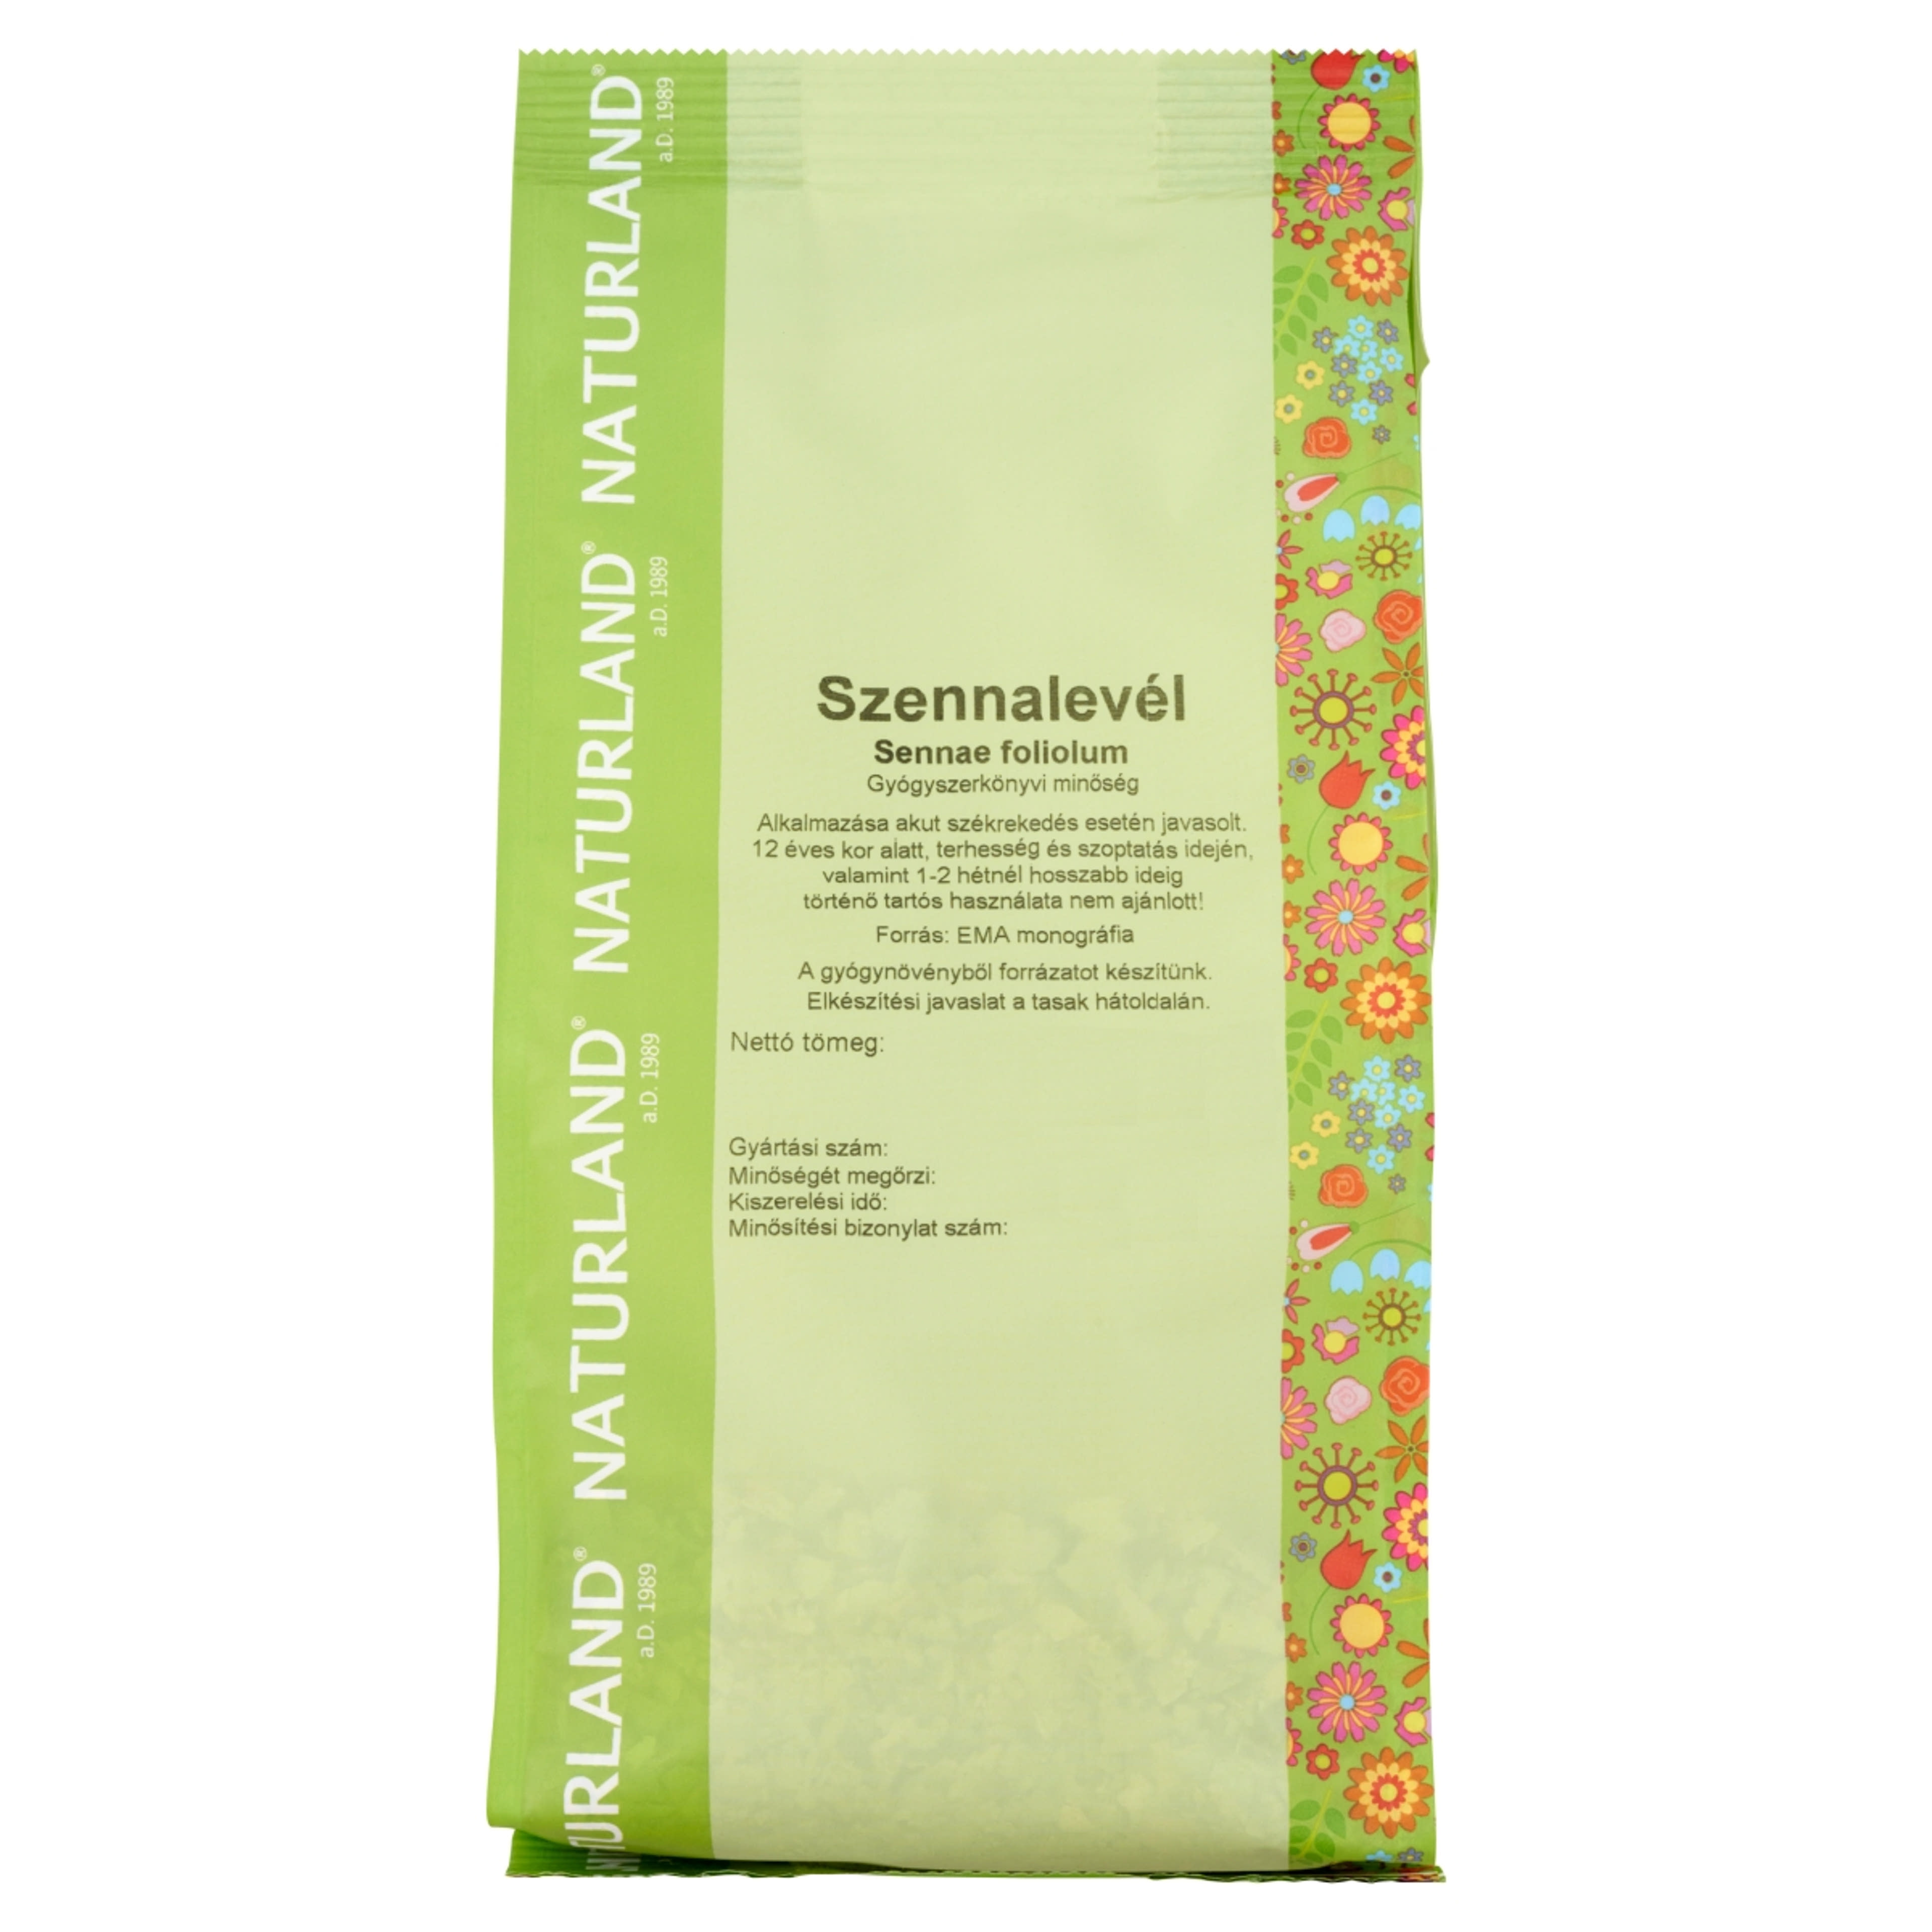 Naturland Szennalevél tea - 50 g